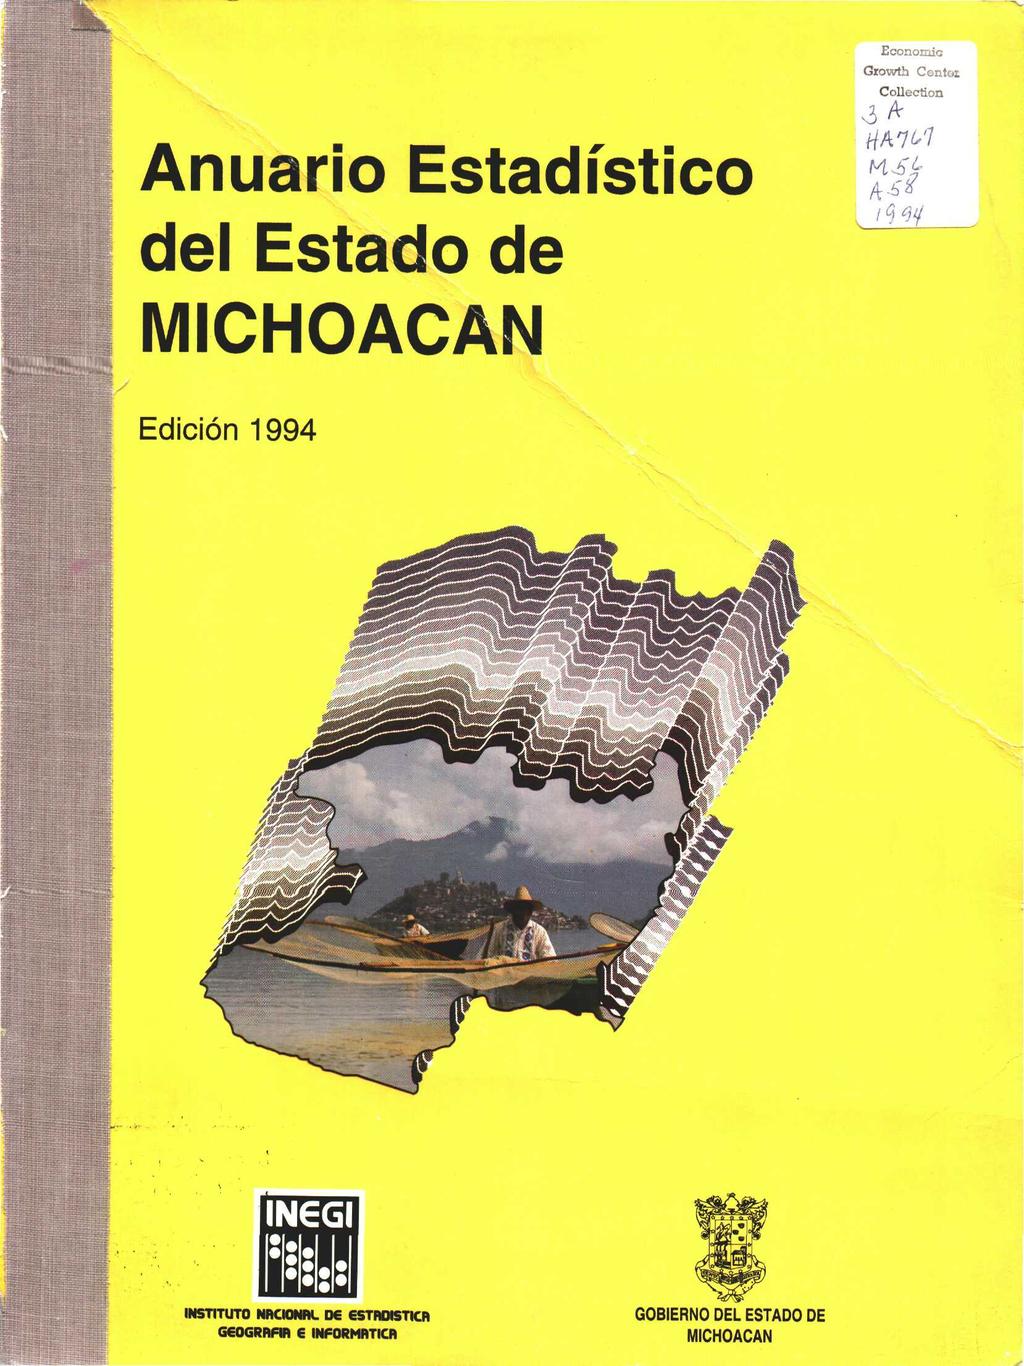 Economía Growth Centot Collectíon Anuario Estadístico del Estado de MICHOACAN Edición